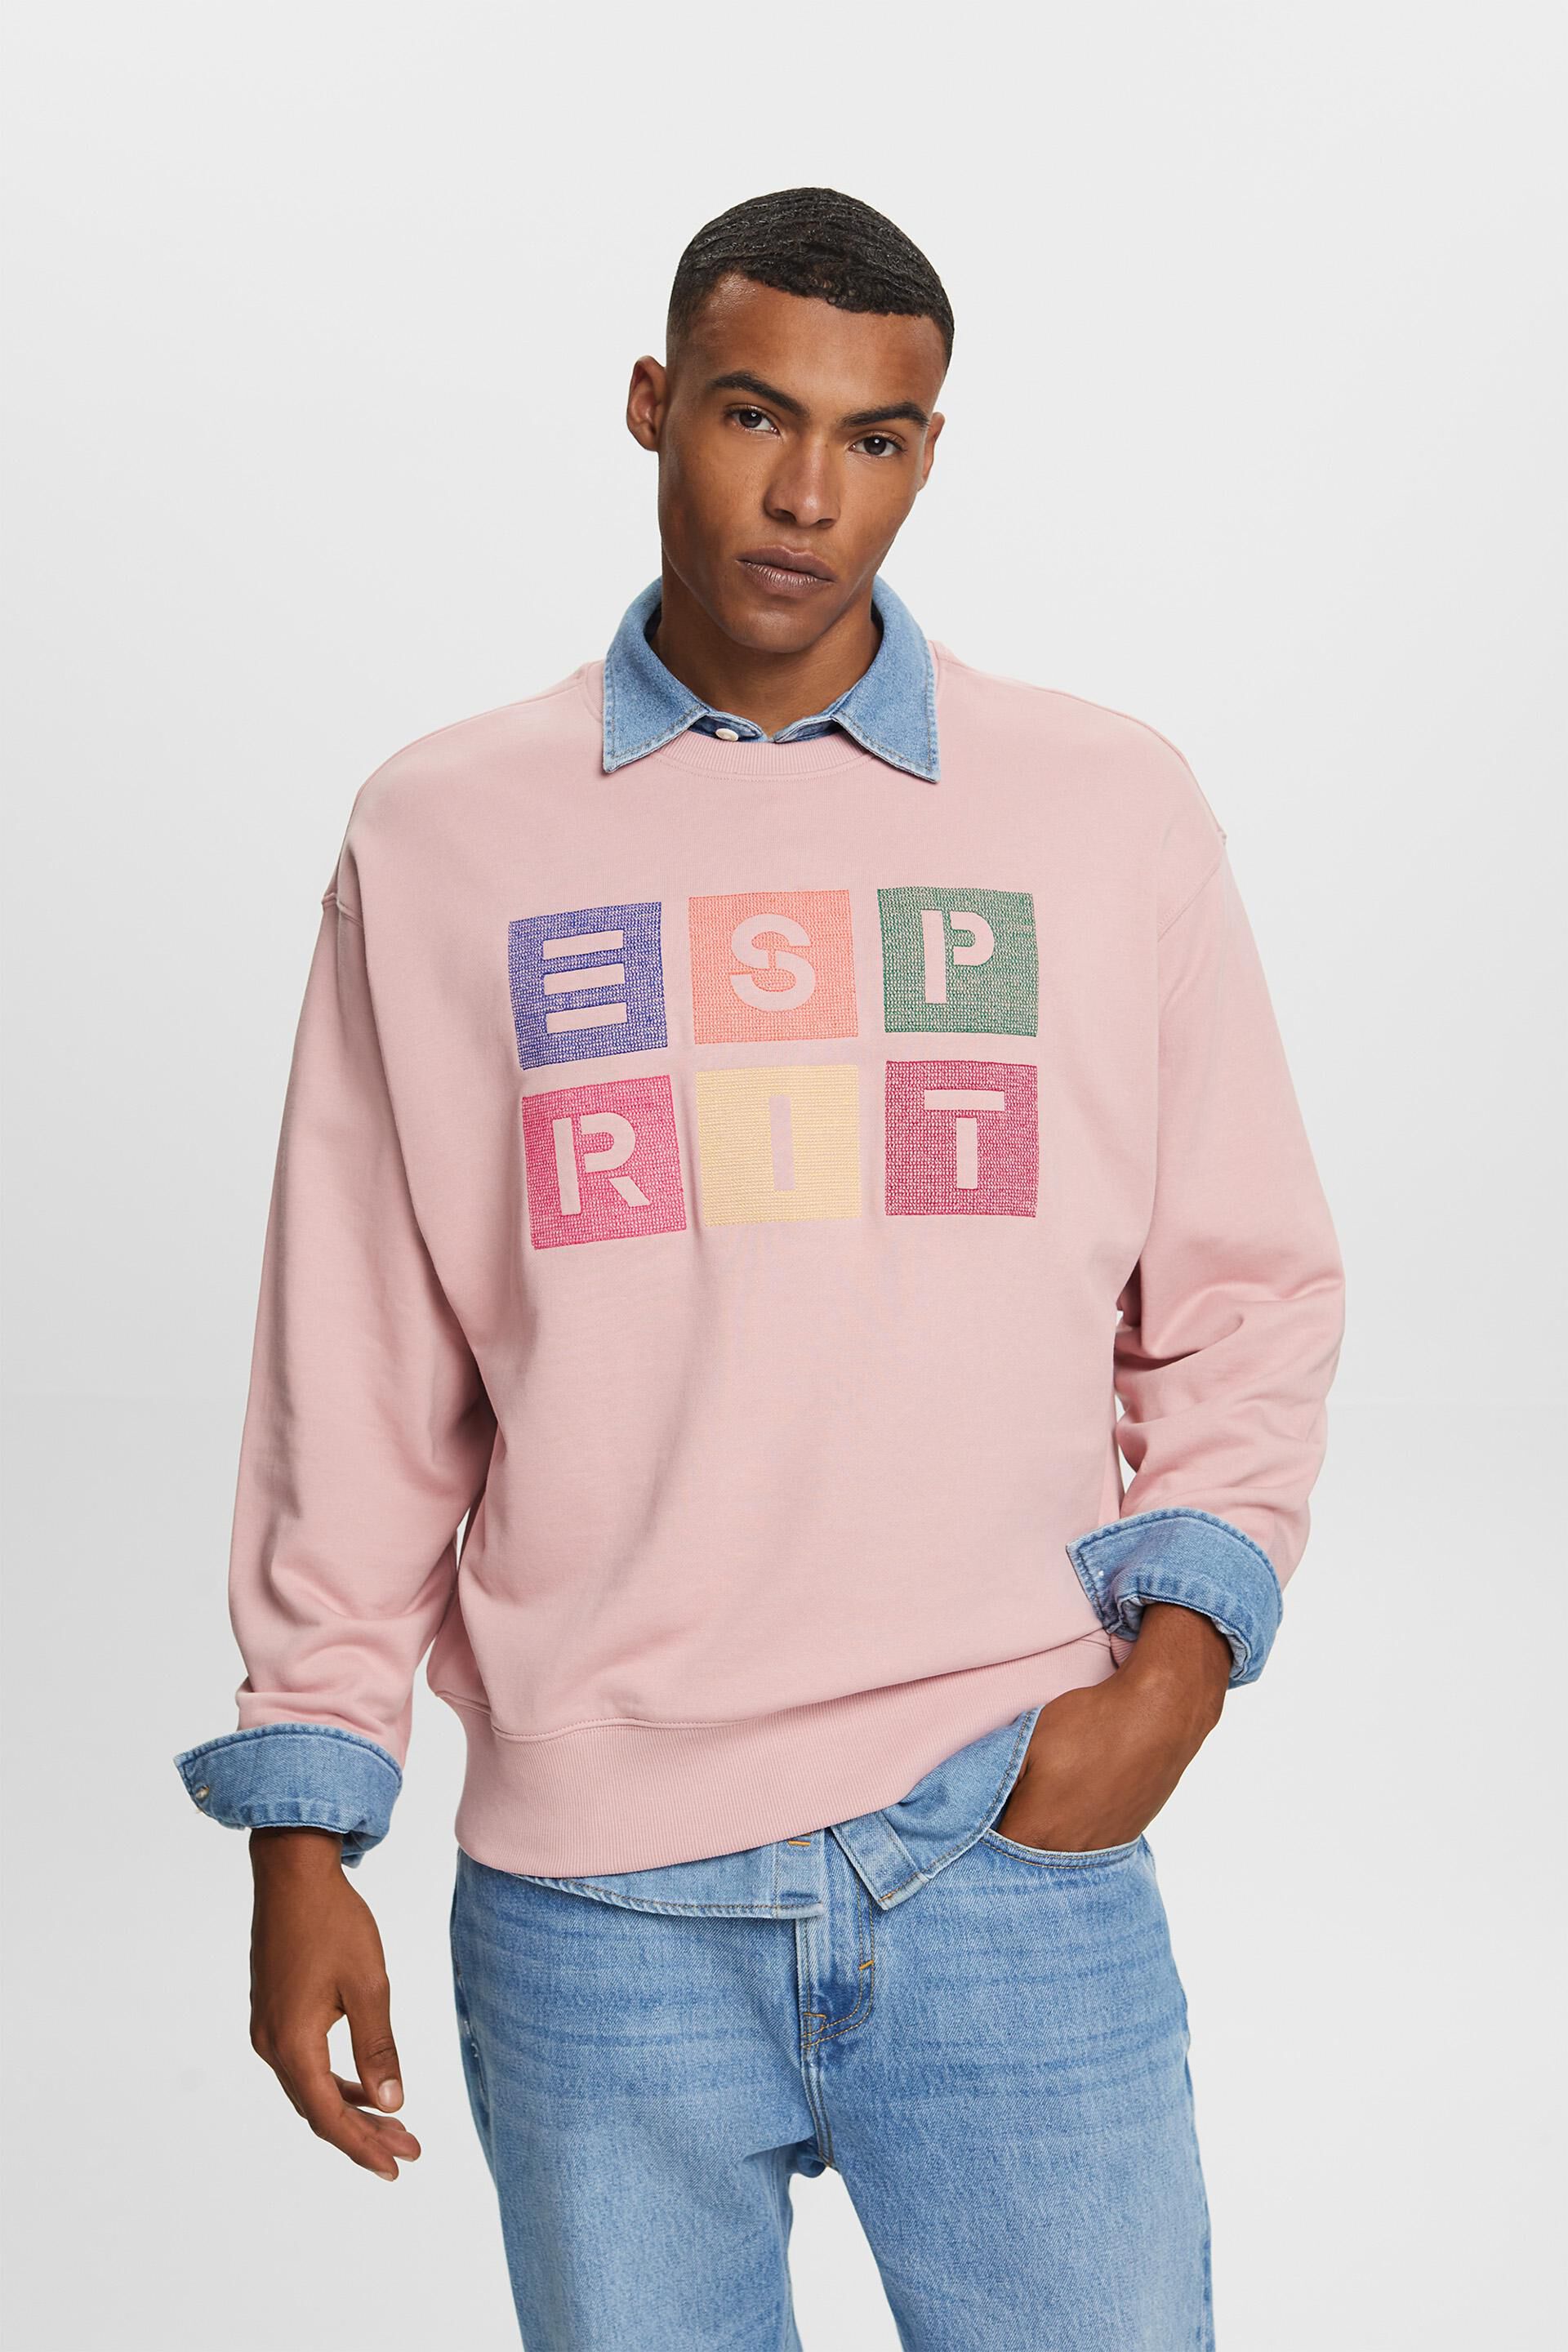 Esprit Bikini Logo sweatshirt, 100% organic cotton